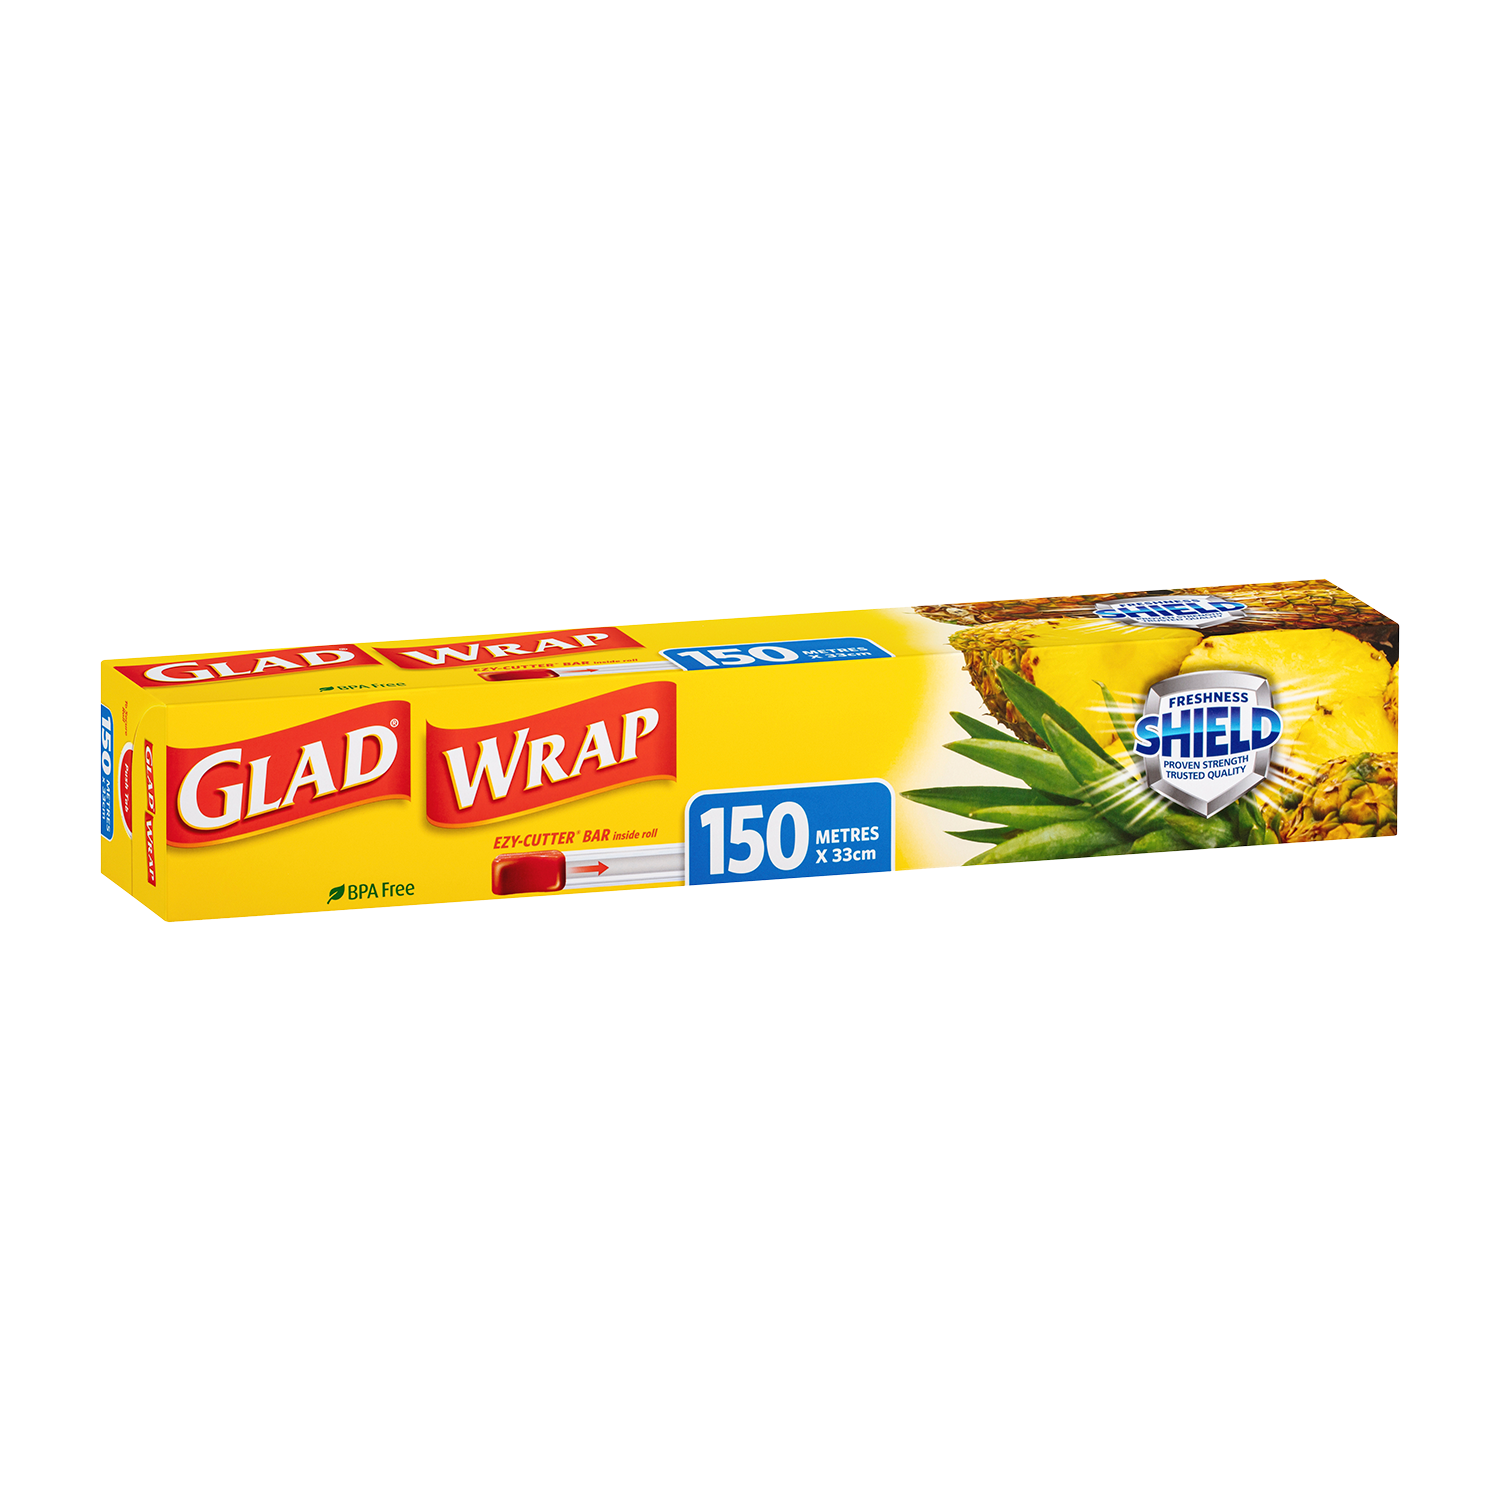 Glad Wrap 150m